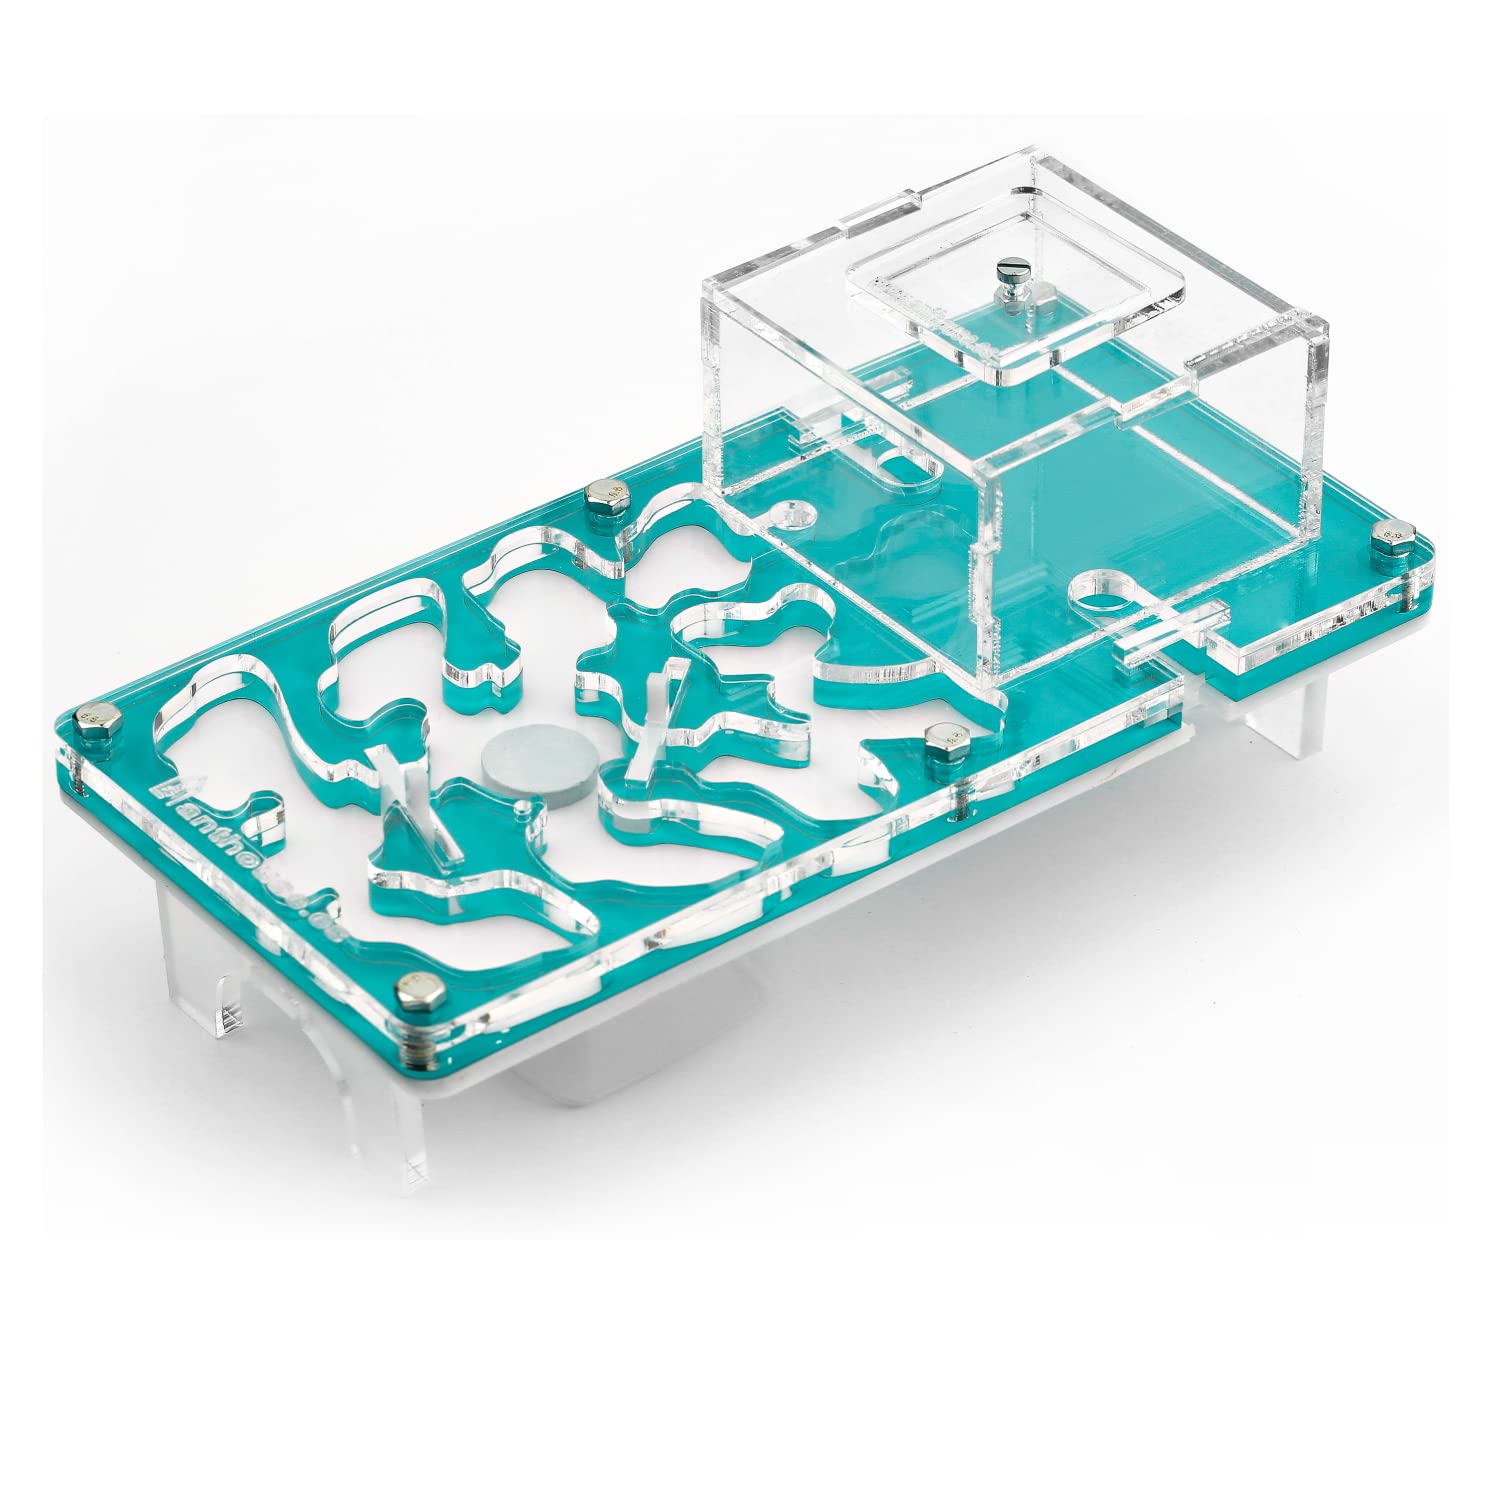 AntHouse - Ant Farm Educational Kit - Pilzmodell - 10x20x1,3 cm - Hellblau - Freie Ameisen